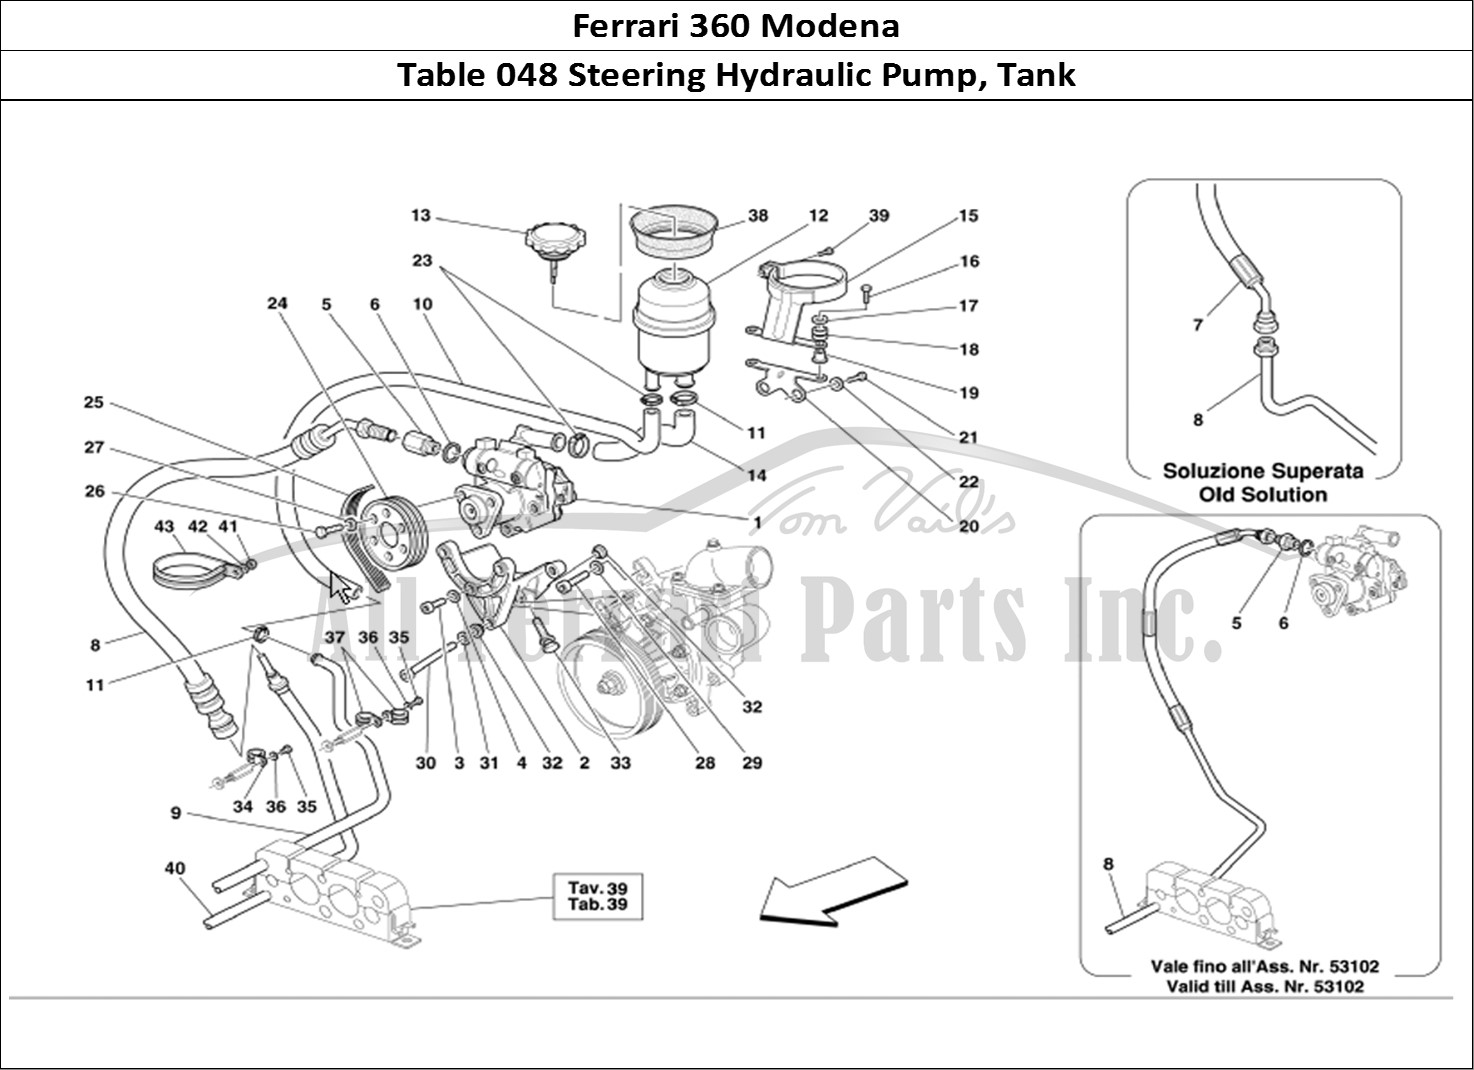 Ferrari Parts Ferrari 360 Modena Page 048 Hydraulic Steering Pump a